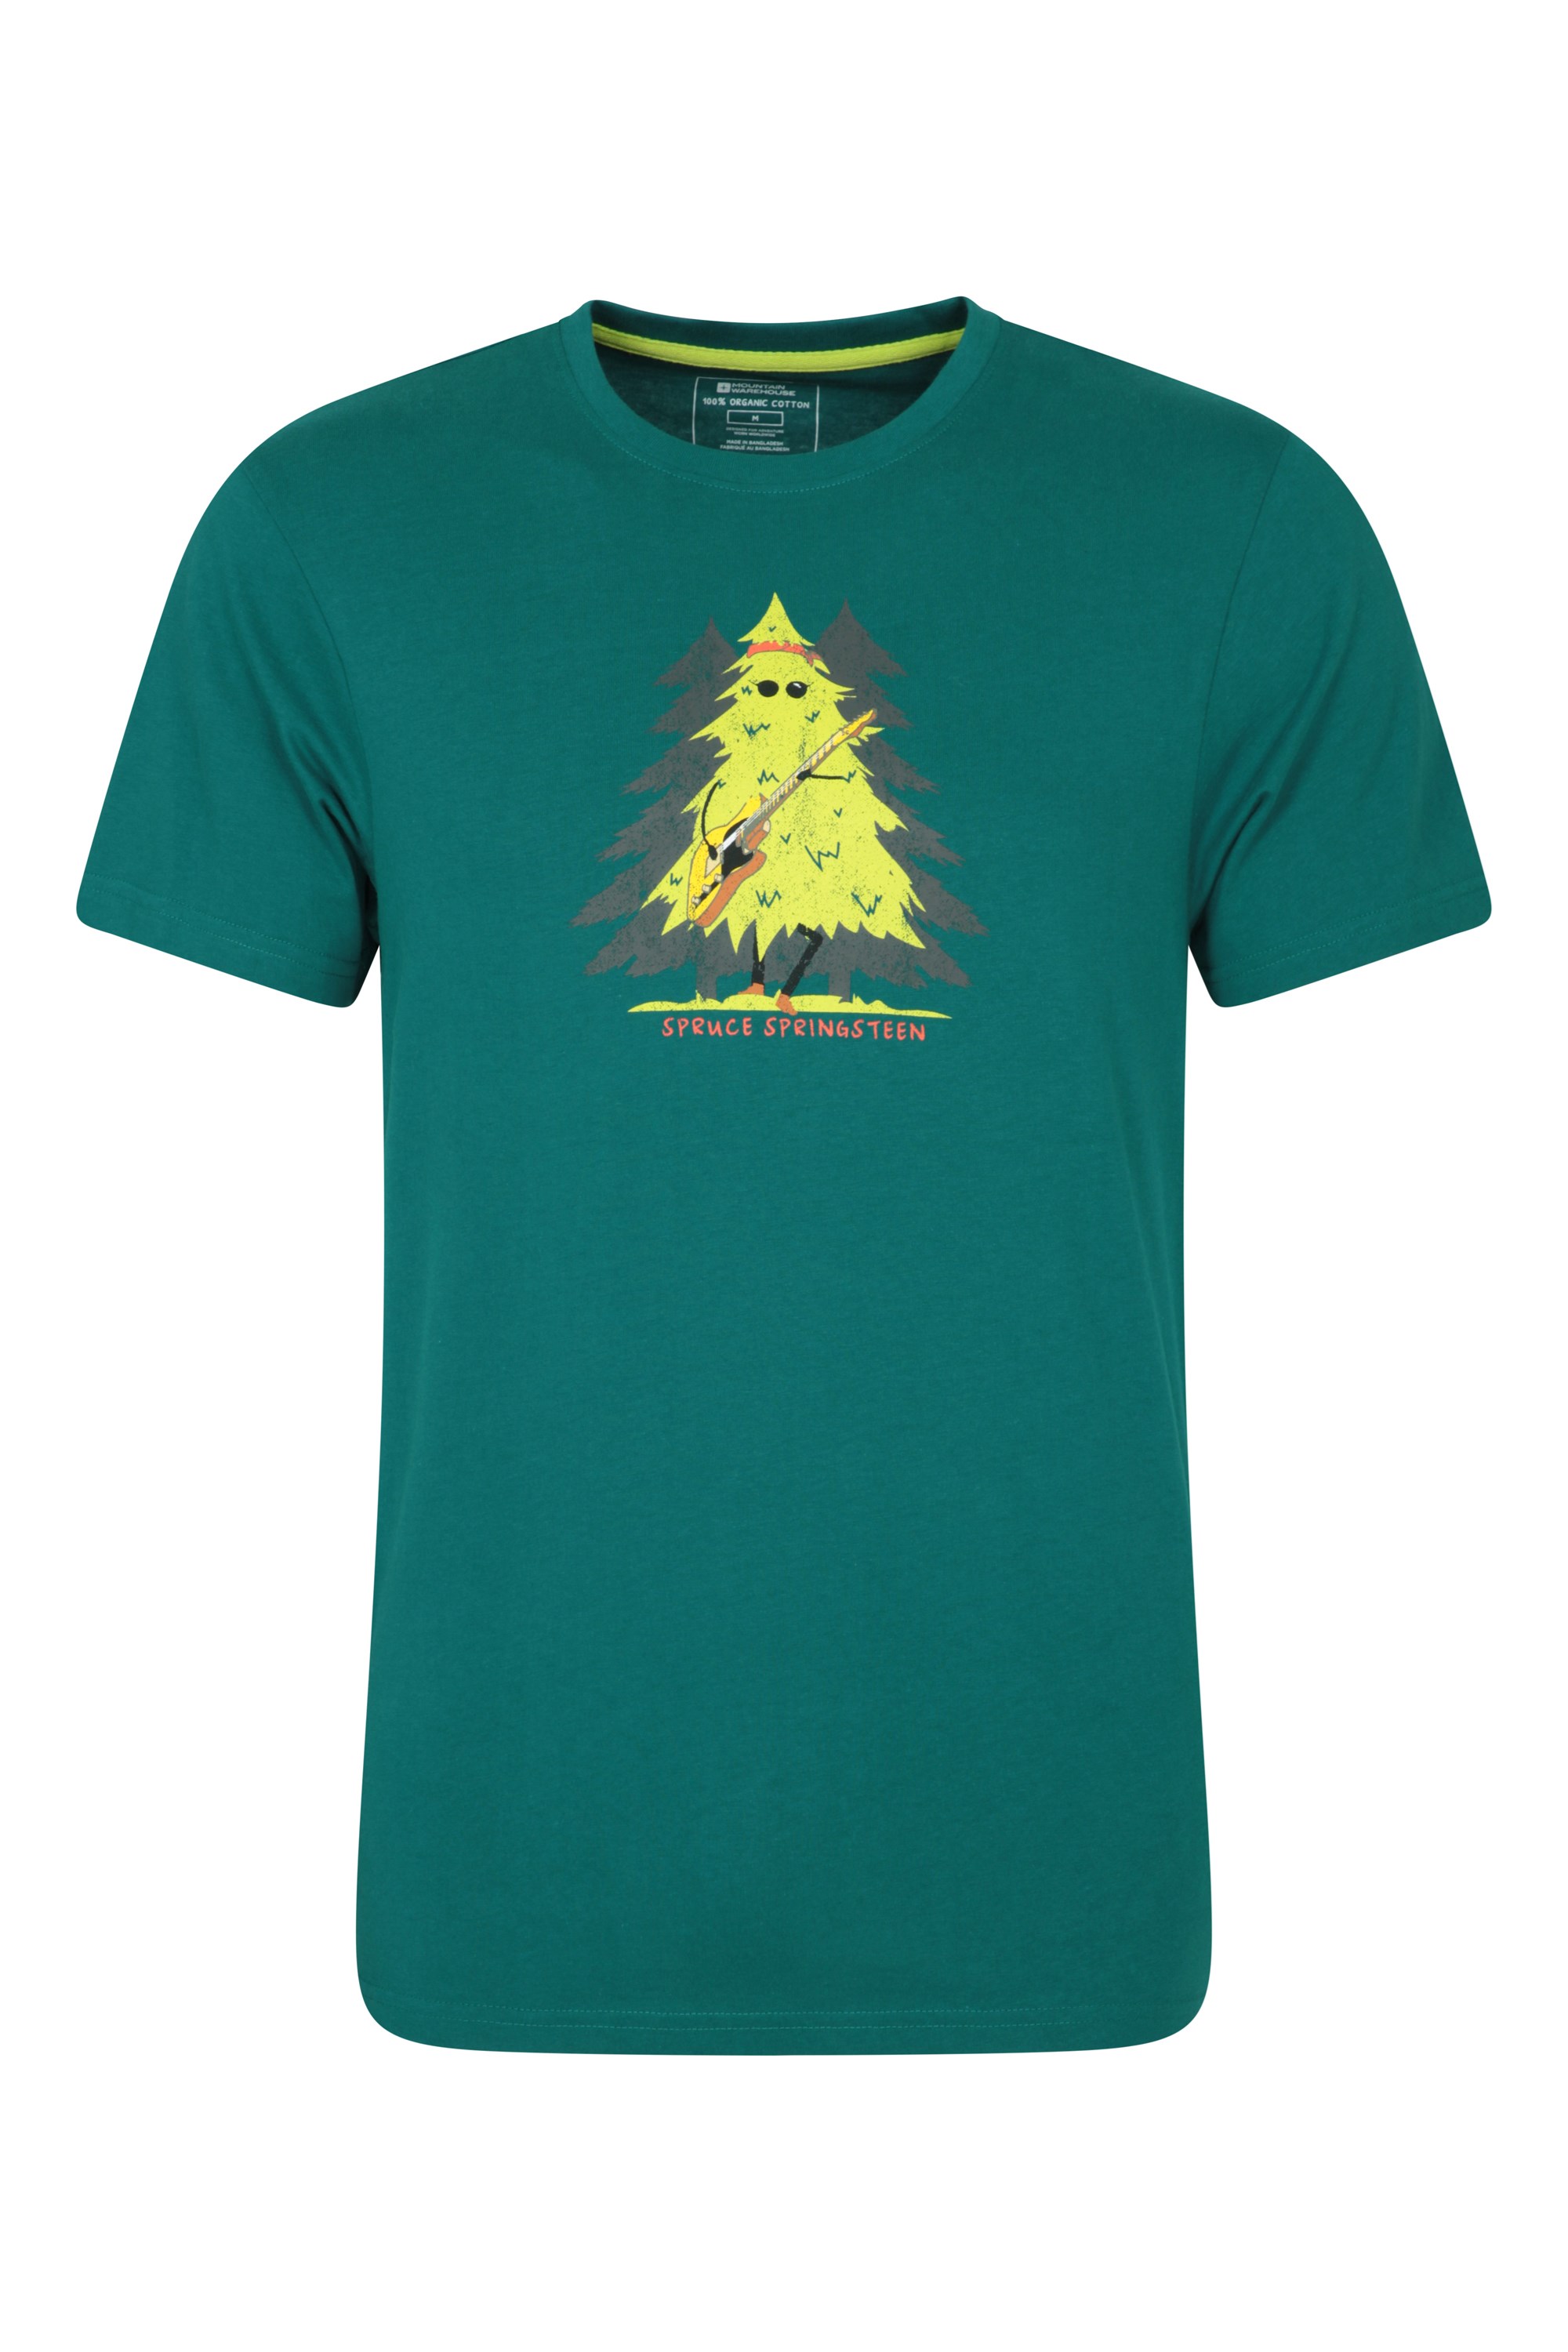 T-Shirt Spruce Springsteen Homme - Vert